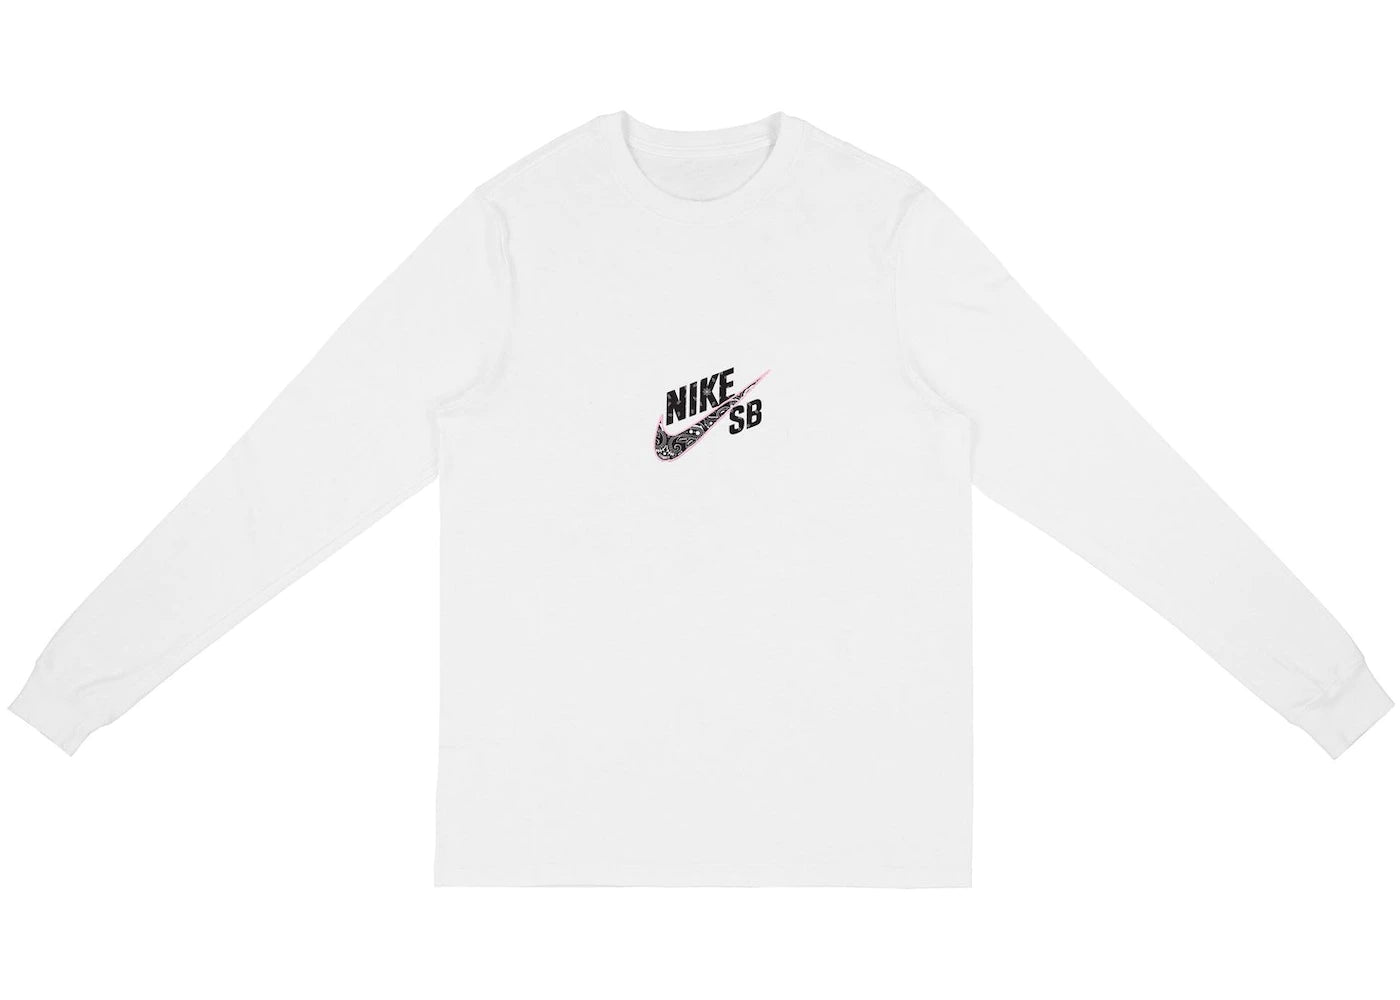 Travis Scott Cactus Jack x Nike SB Longsleeve T-Shirt White